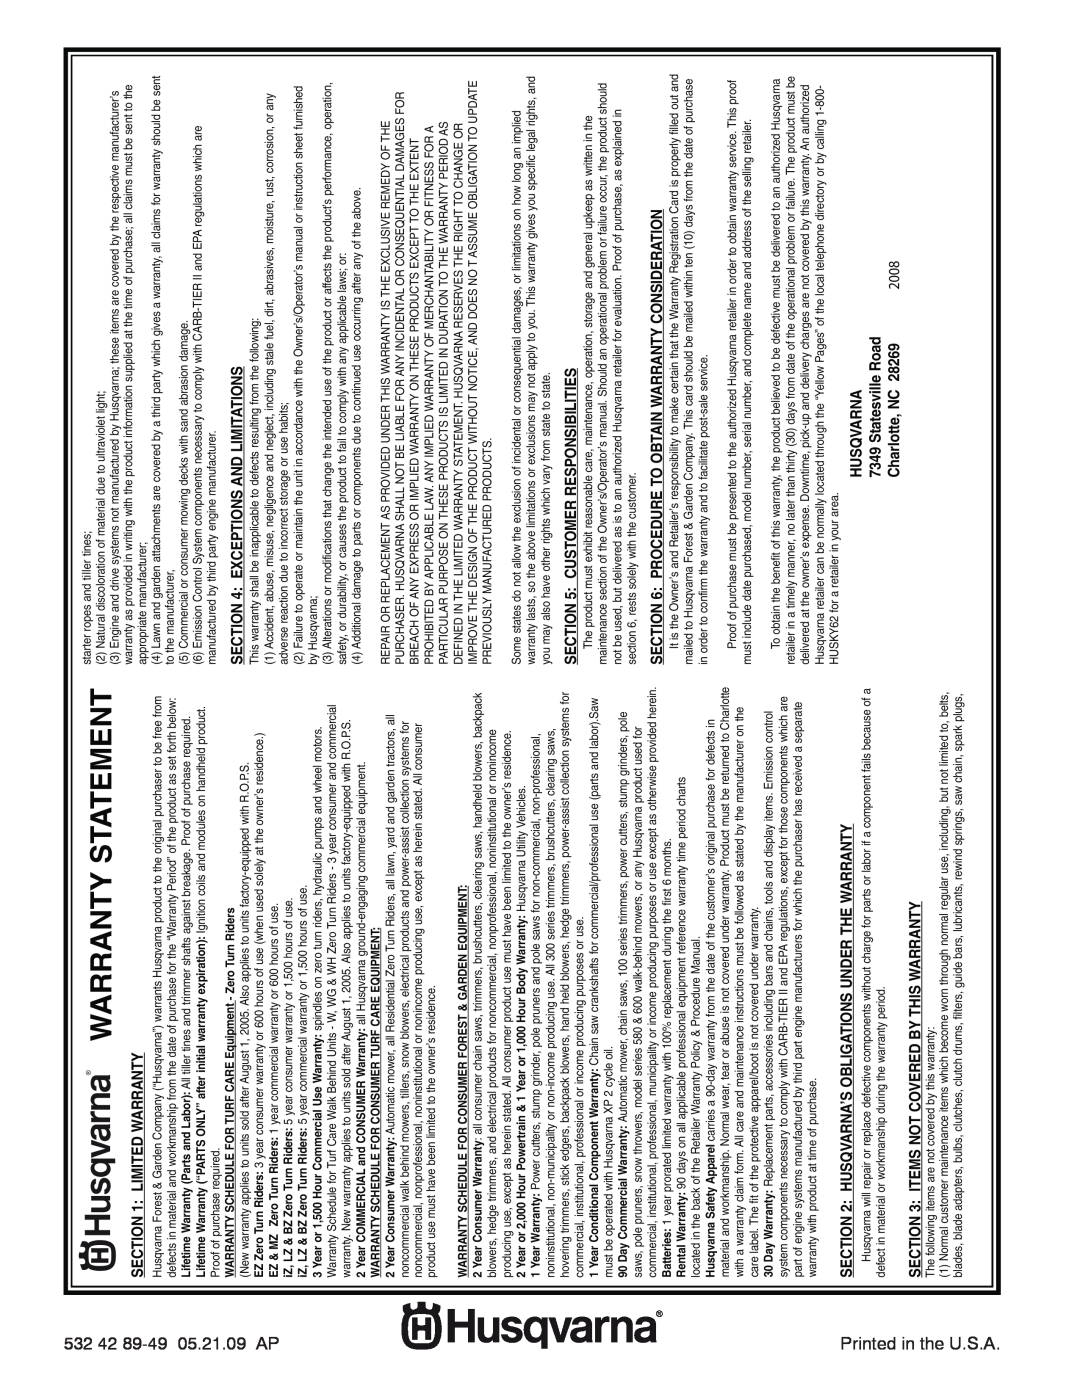 Husqvarna 532 42 89-49 Warranty Statement, Limited Warranty, Husqvarna’S Obligations Under The Warranty, Statesville Road 